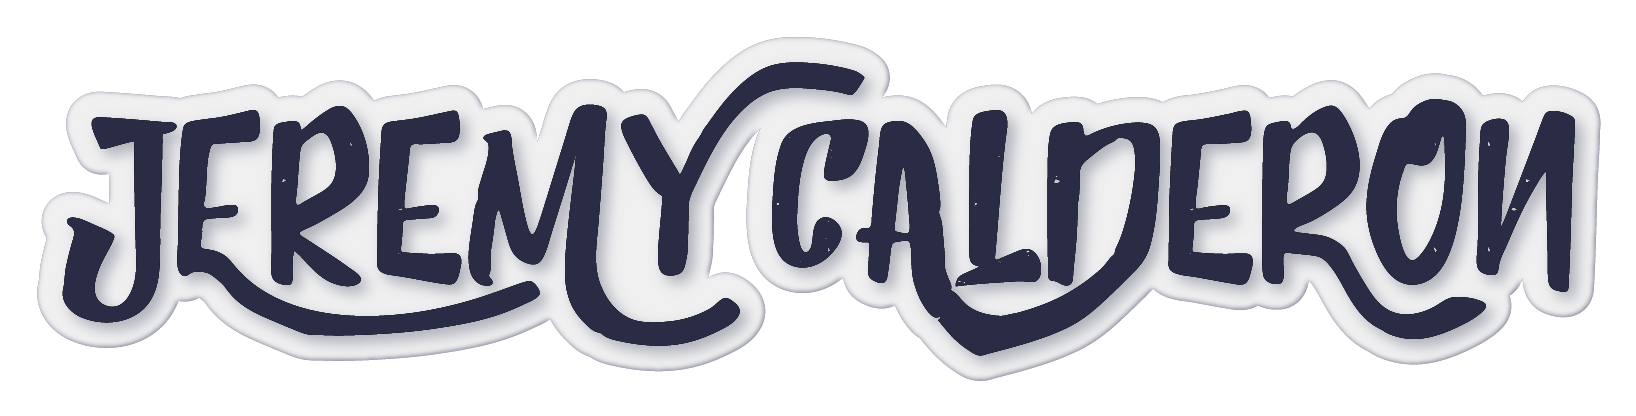 Jeremy Name Logo - Jeremy Calderon. Illustrations, graphics, and other fun stuff!